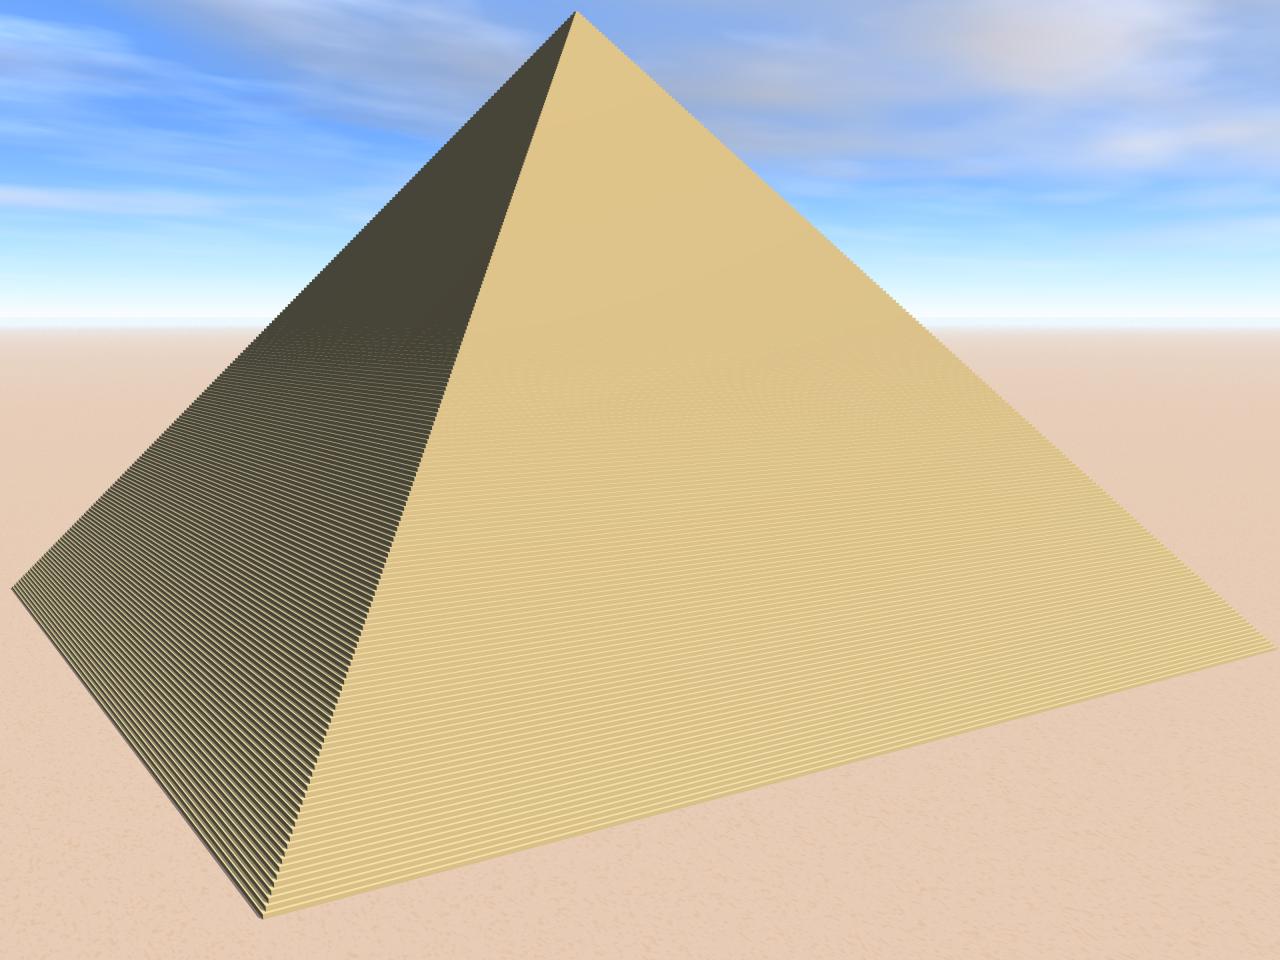 Nom : PyramideAA.jpg
Affichages : 210
Taille : 118,6 Ko